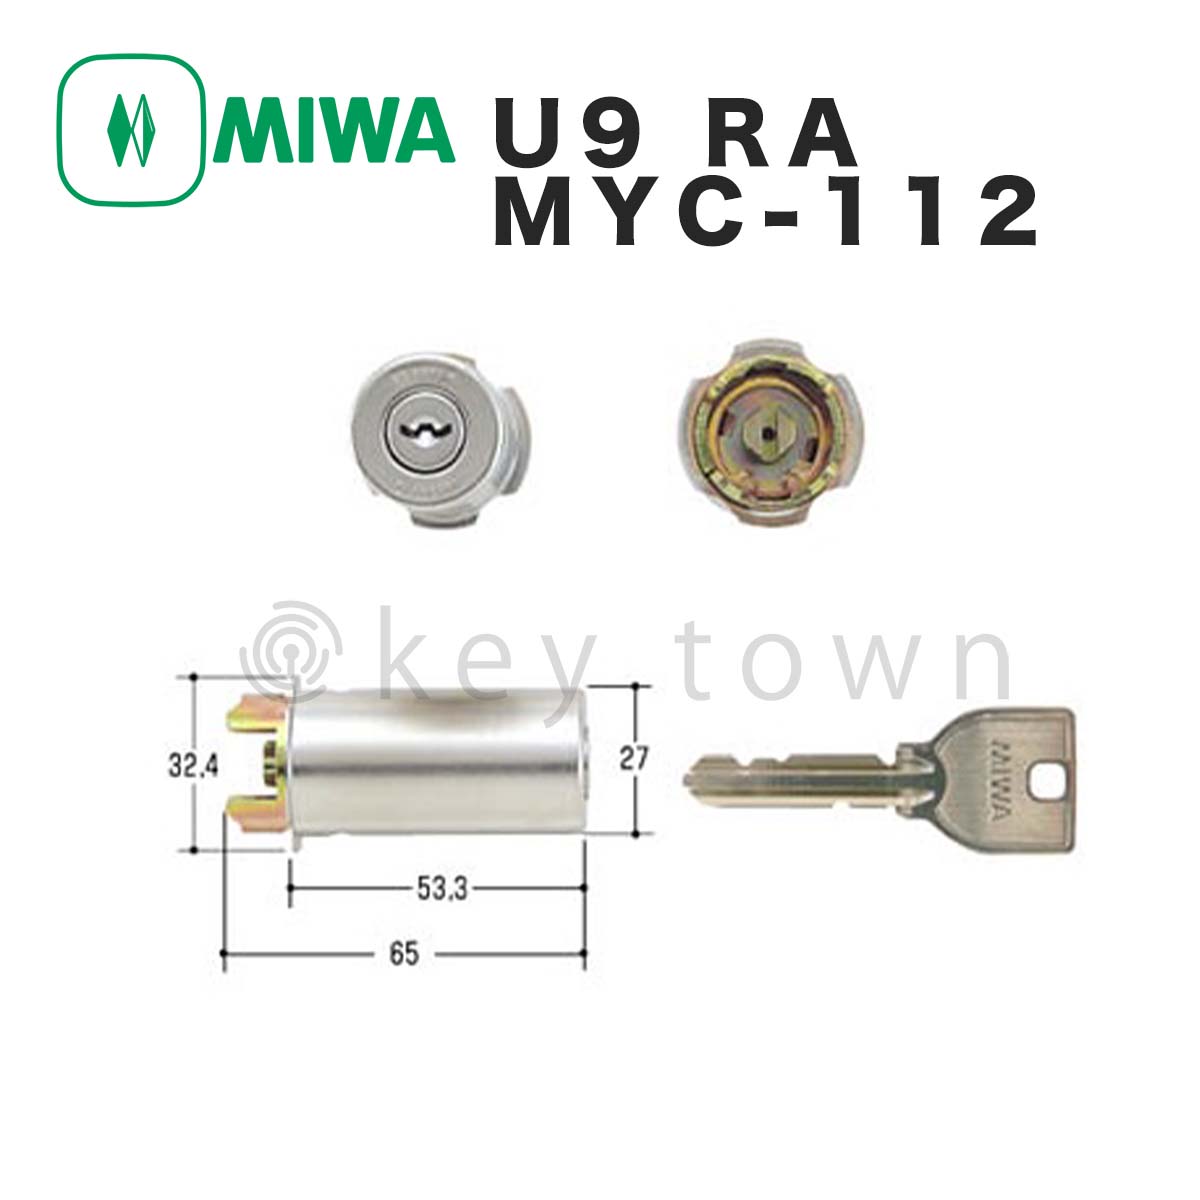 MIWA 【美和ロック】 U9 RA 85RA MCY-112 鍵 交換 取替えシリンダー